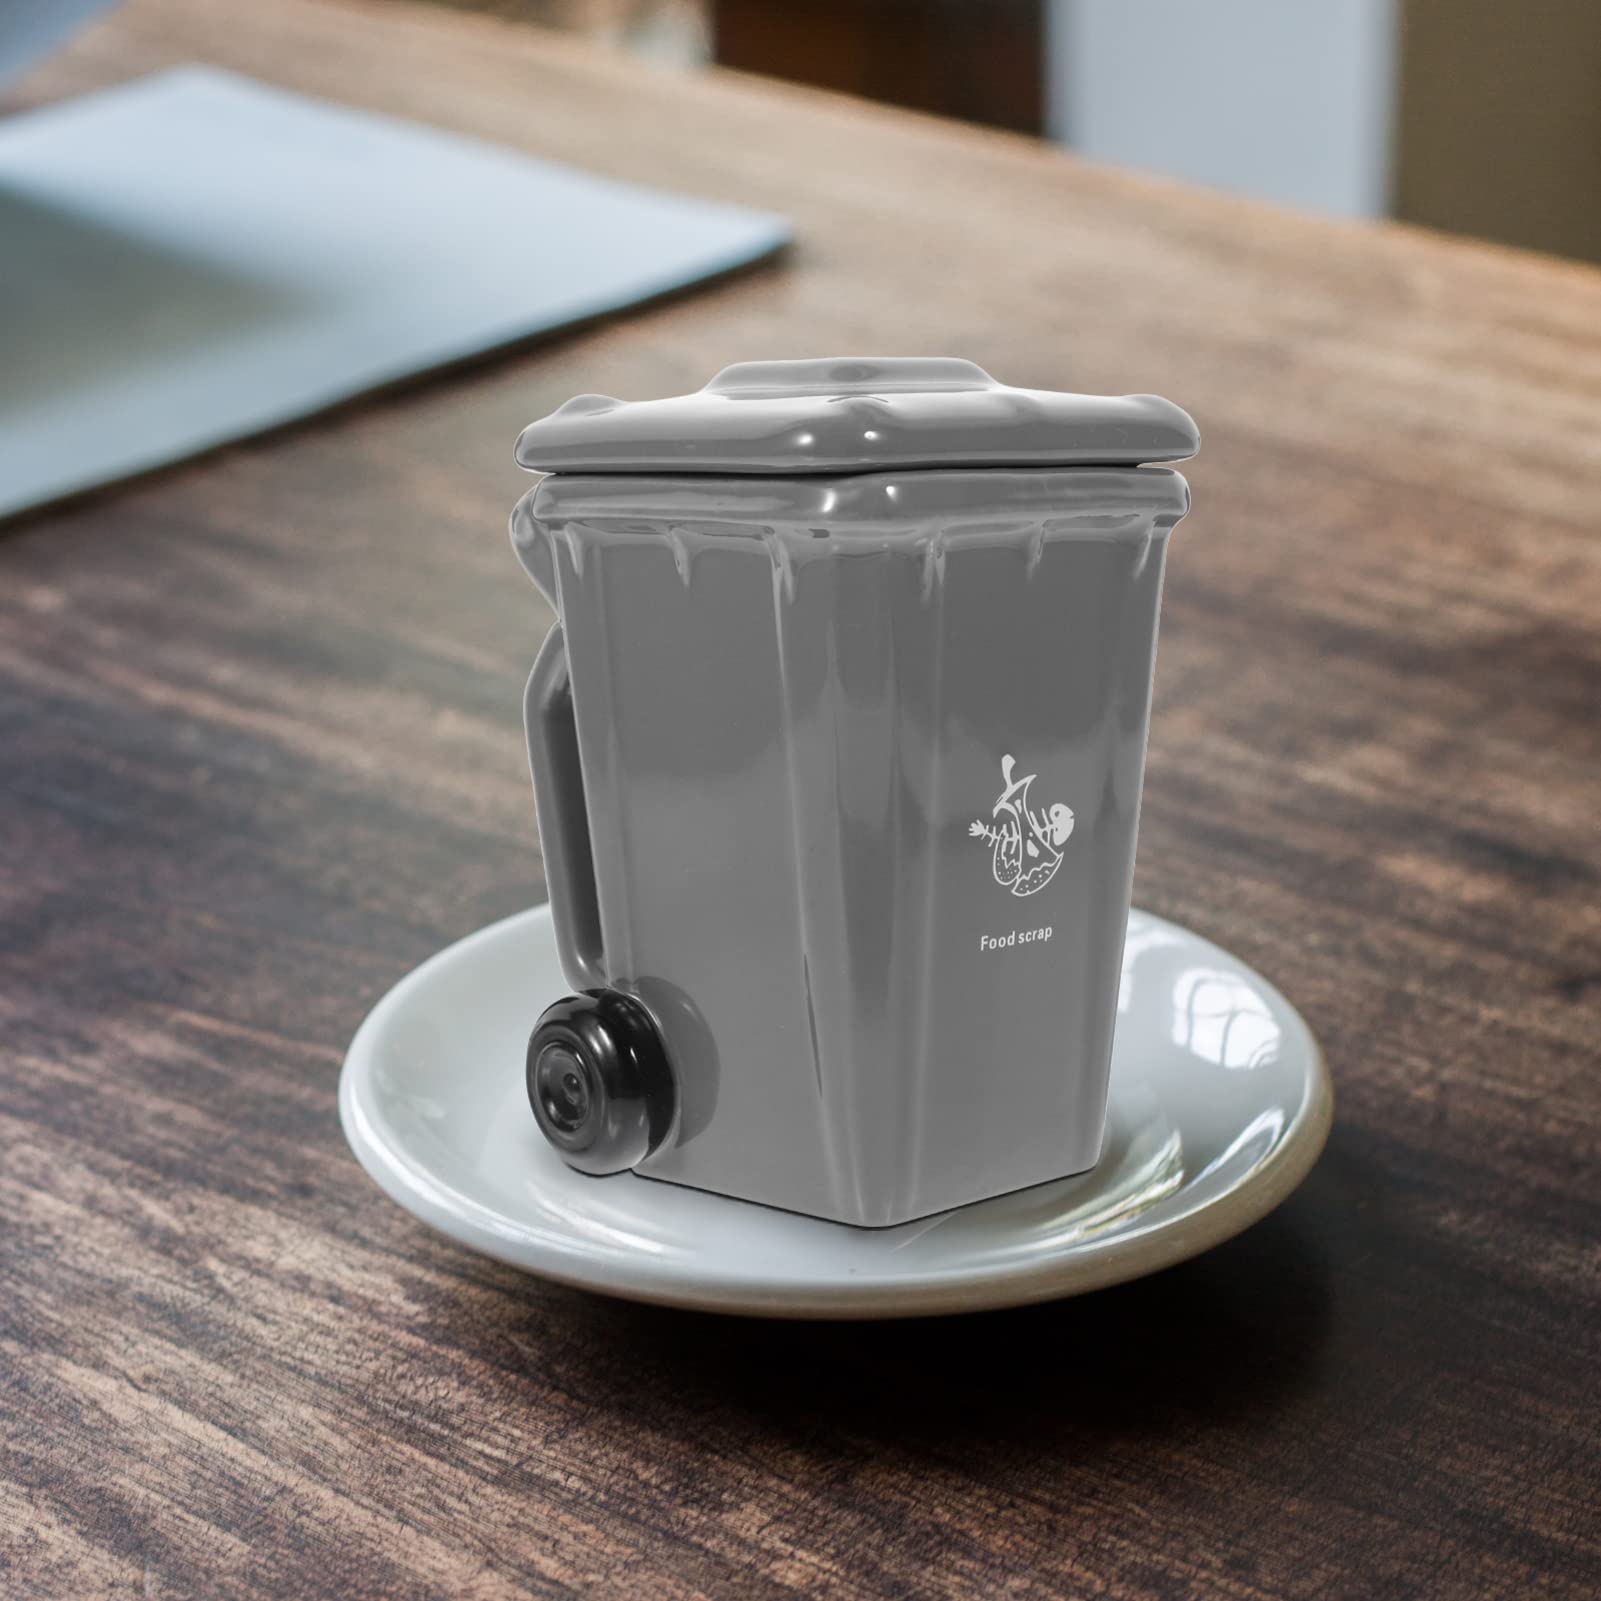 Hemoton Funny Trash Can Mug Porcelain Coffee Cup with Handle Cover Novelty Garbage Bin Ceramic Mug Porcelain Tea Cup Water Drinking Cup Milk Mug Gifts